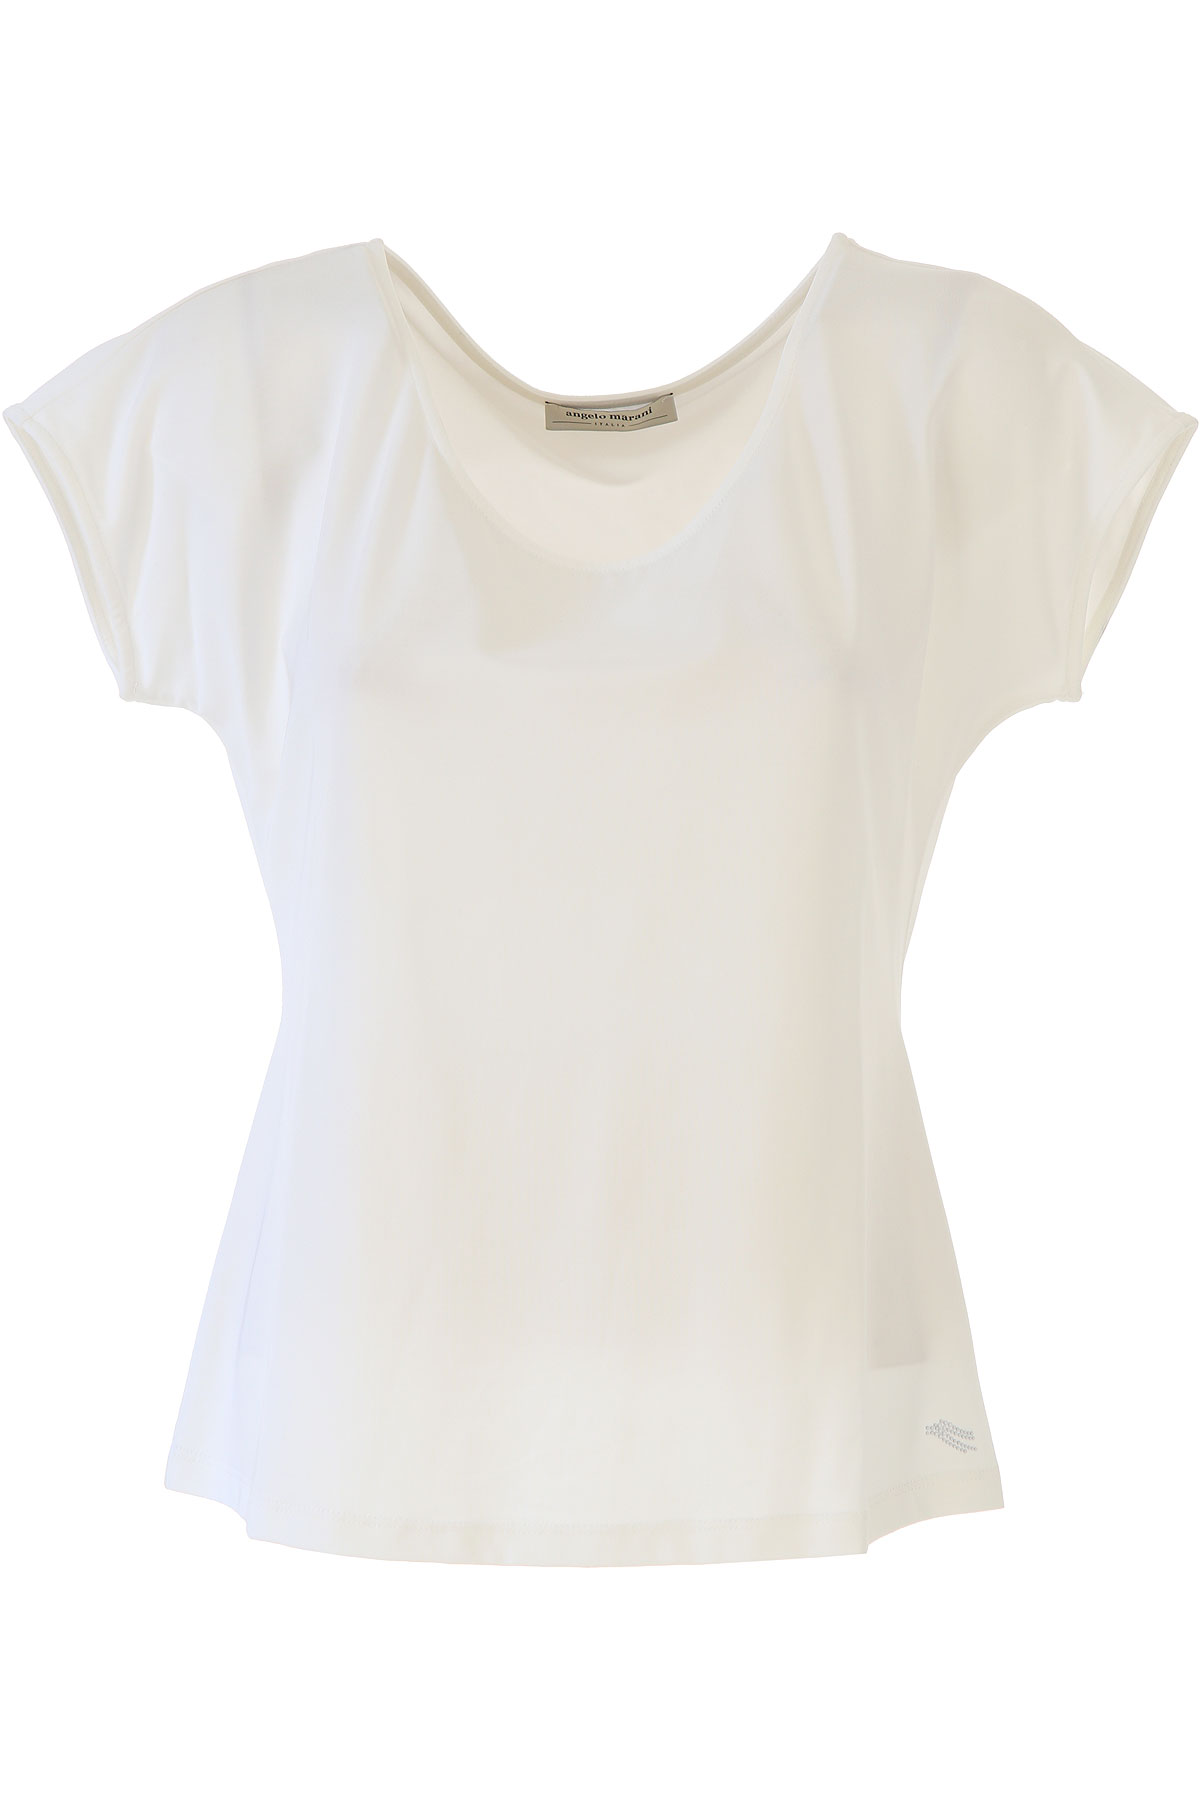 Angelo Marani T-shirt Femme , Blanc, Viscose, 2017, 42 44 46 48 50